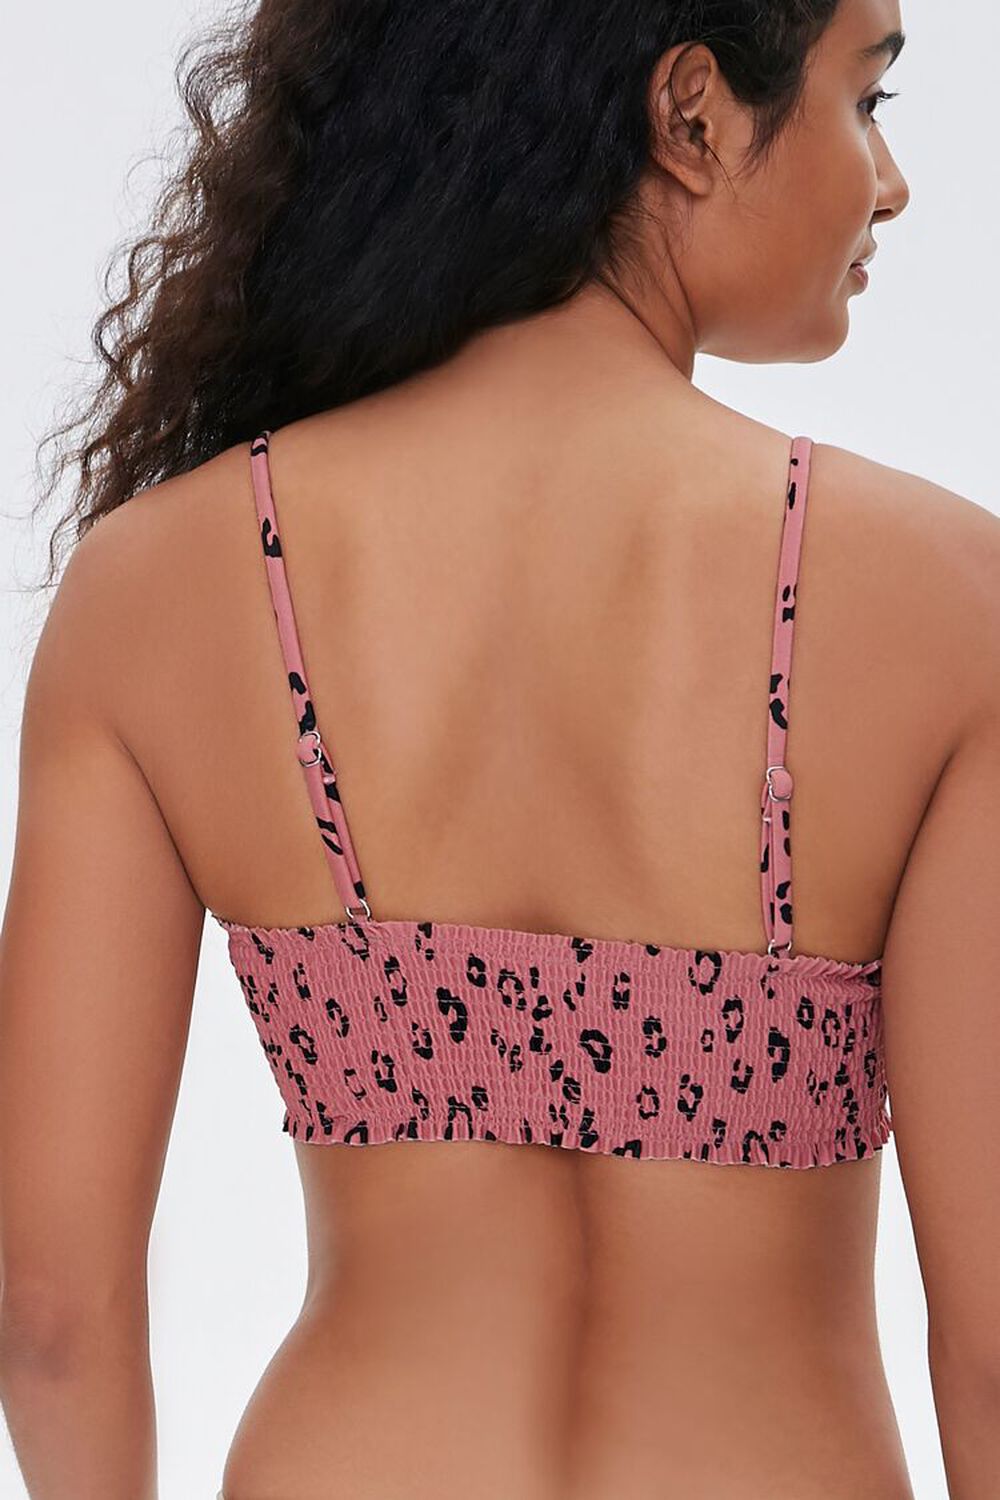 ROSE/BLACK Leopard Print Bralette Bikini Top, image 3